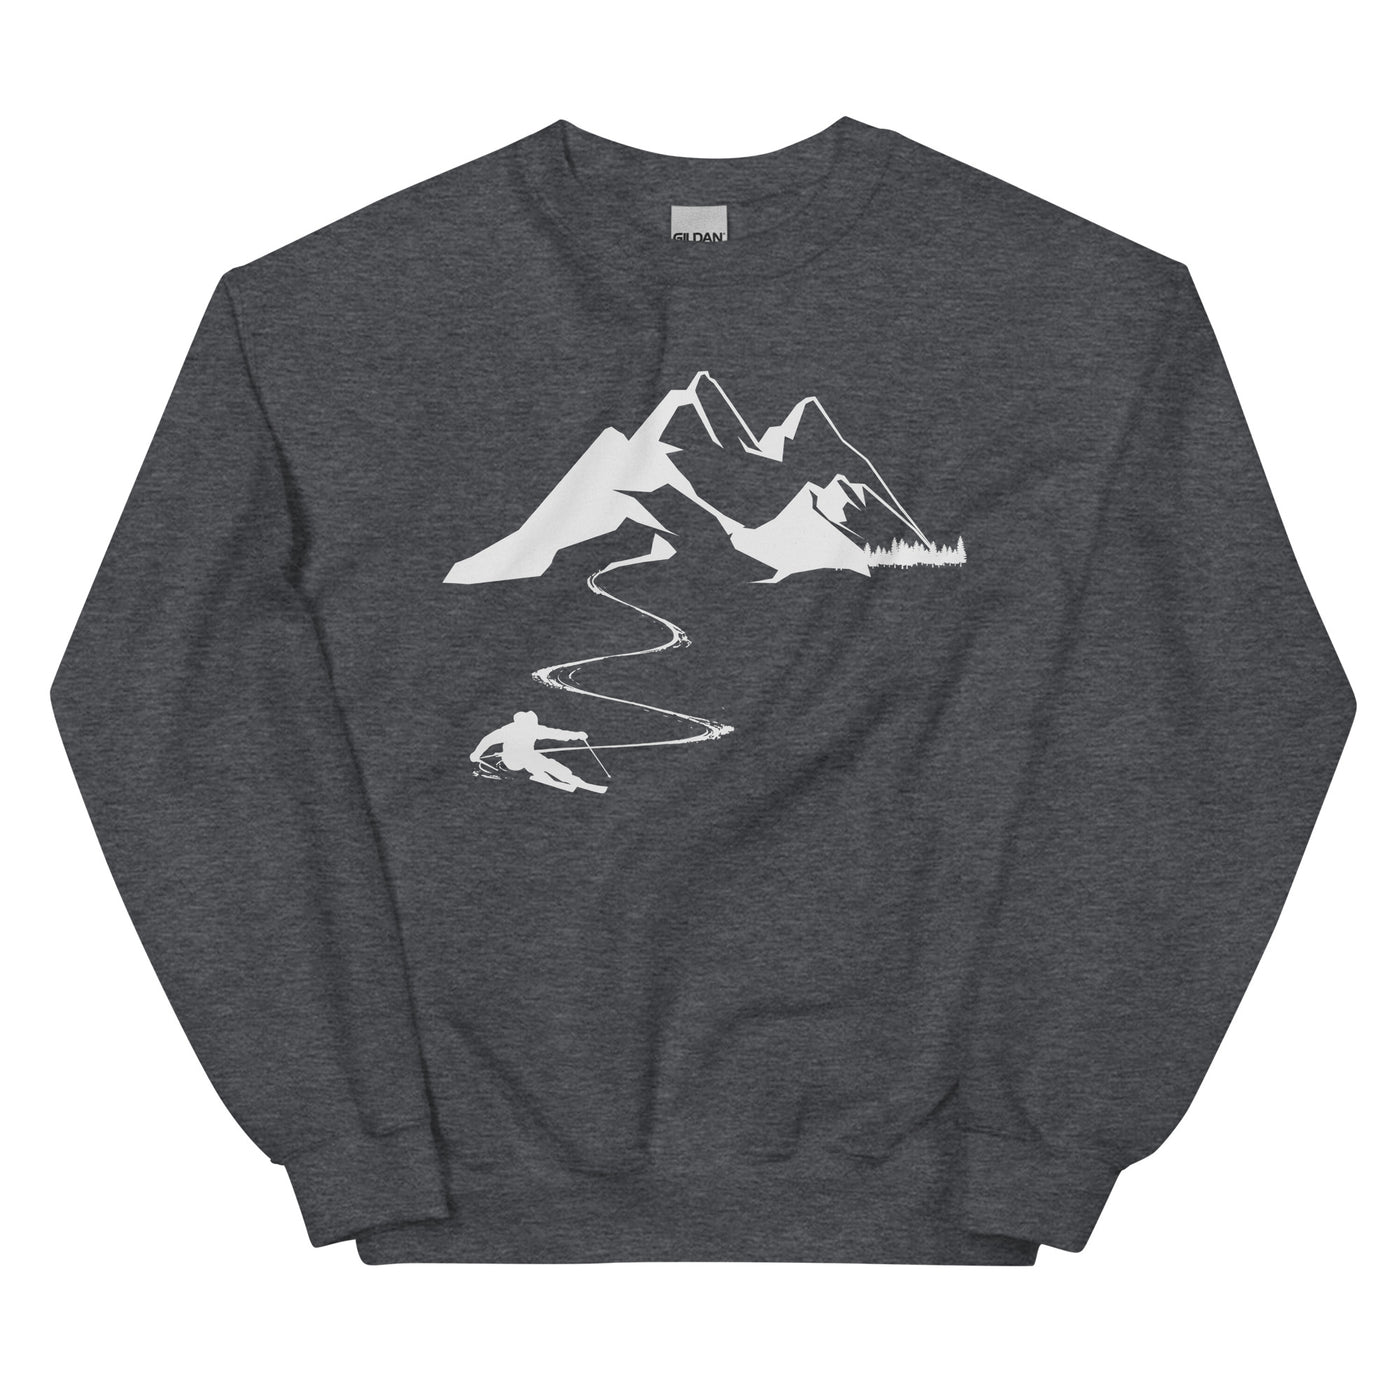 Skisüchtig - Sweatshirt (Unisex) klettern ski xxx yyy zzz Dark Heather